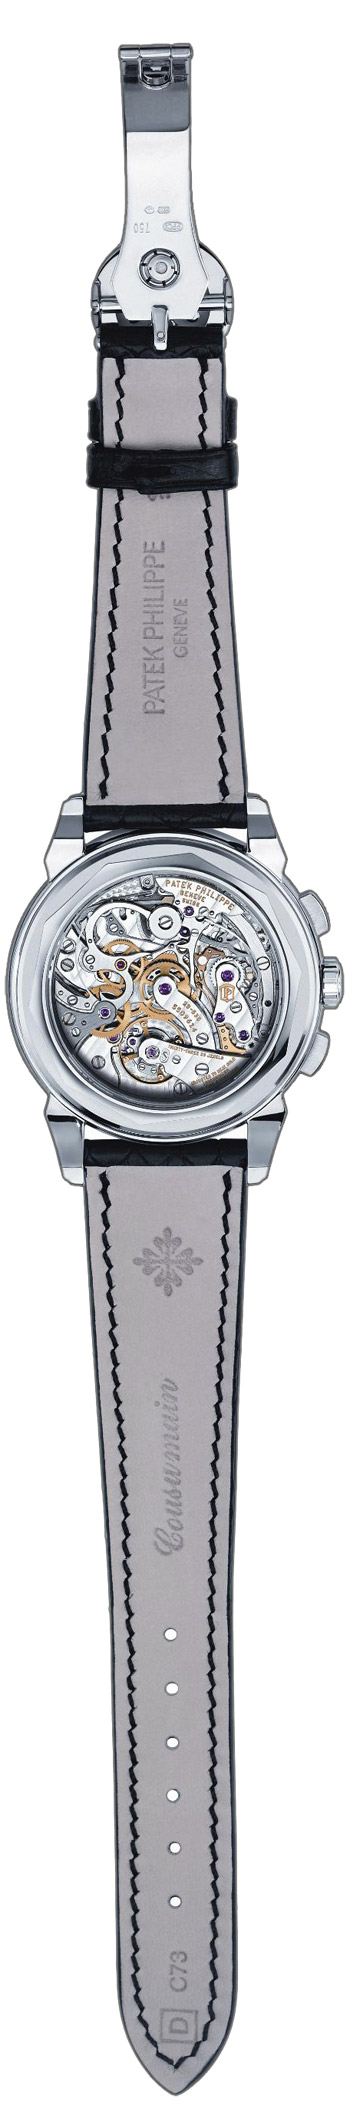 Patek Philippe Grand Complication Men's Watch Model 5270G Thumbnail 4